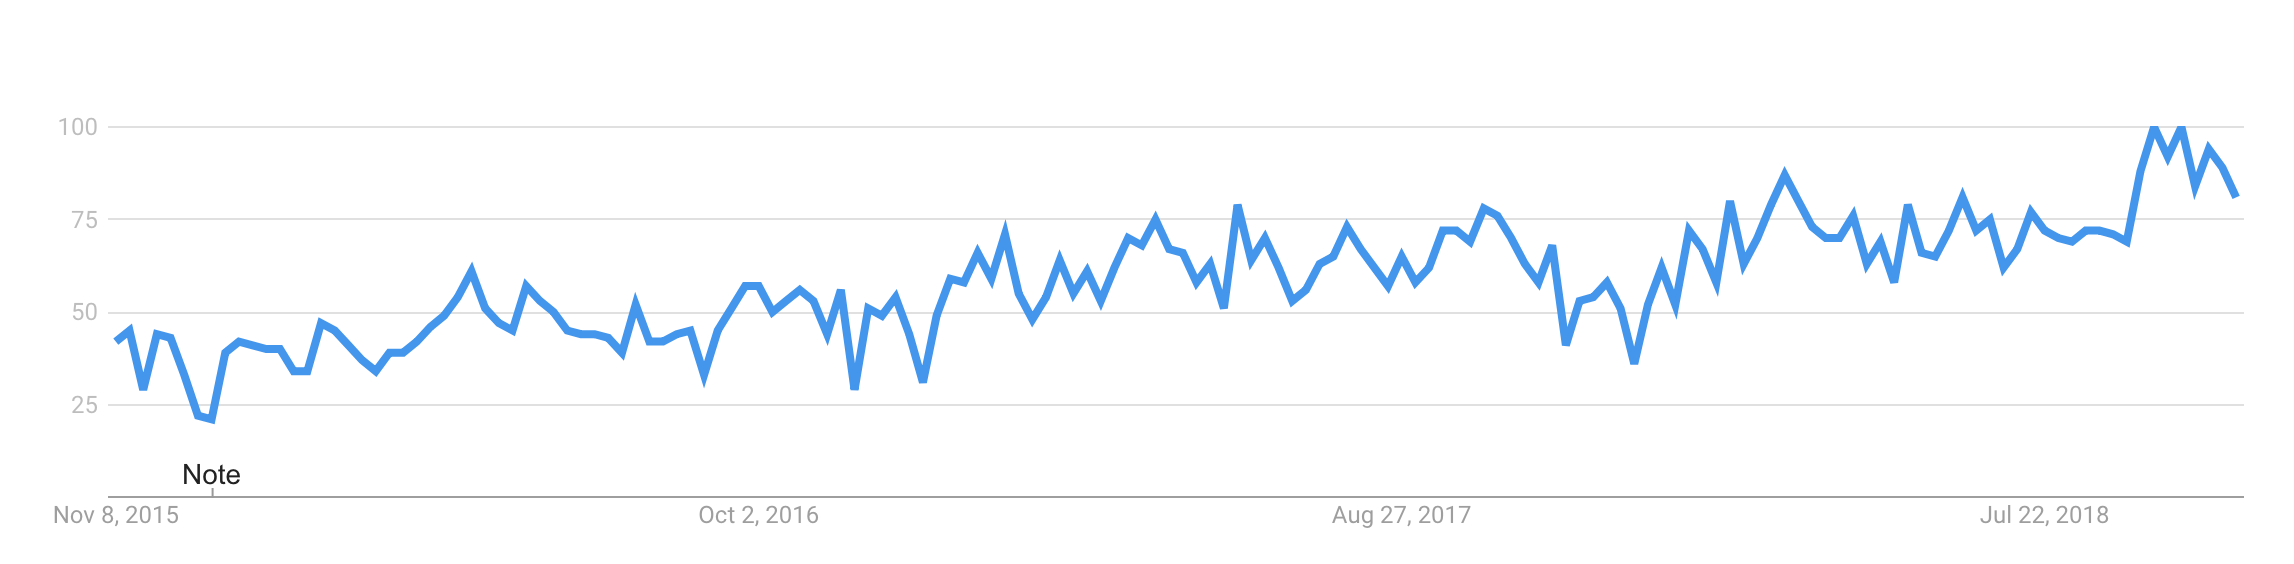 devops keyword trend on Google